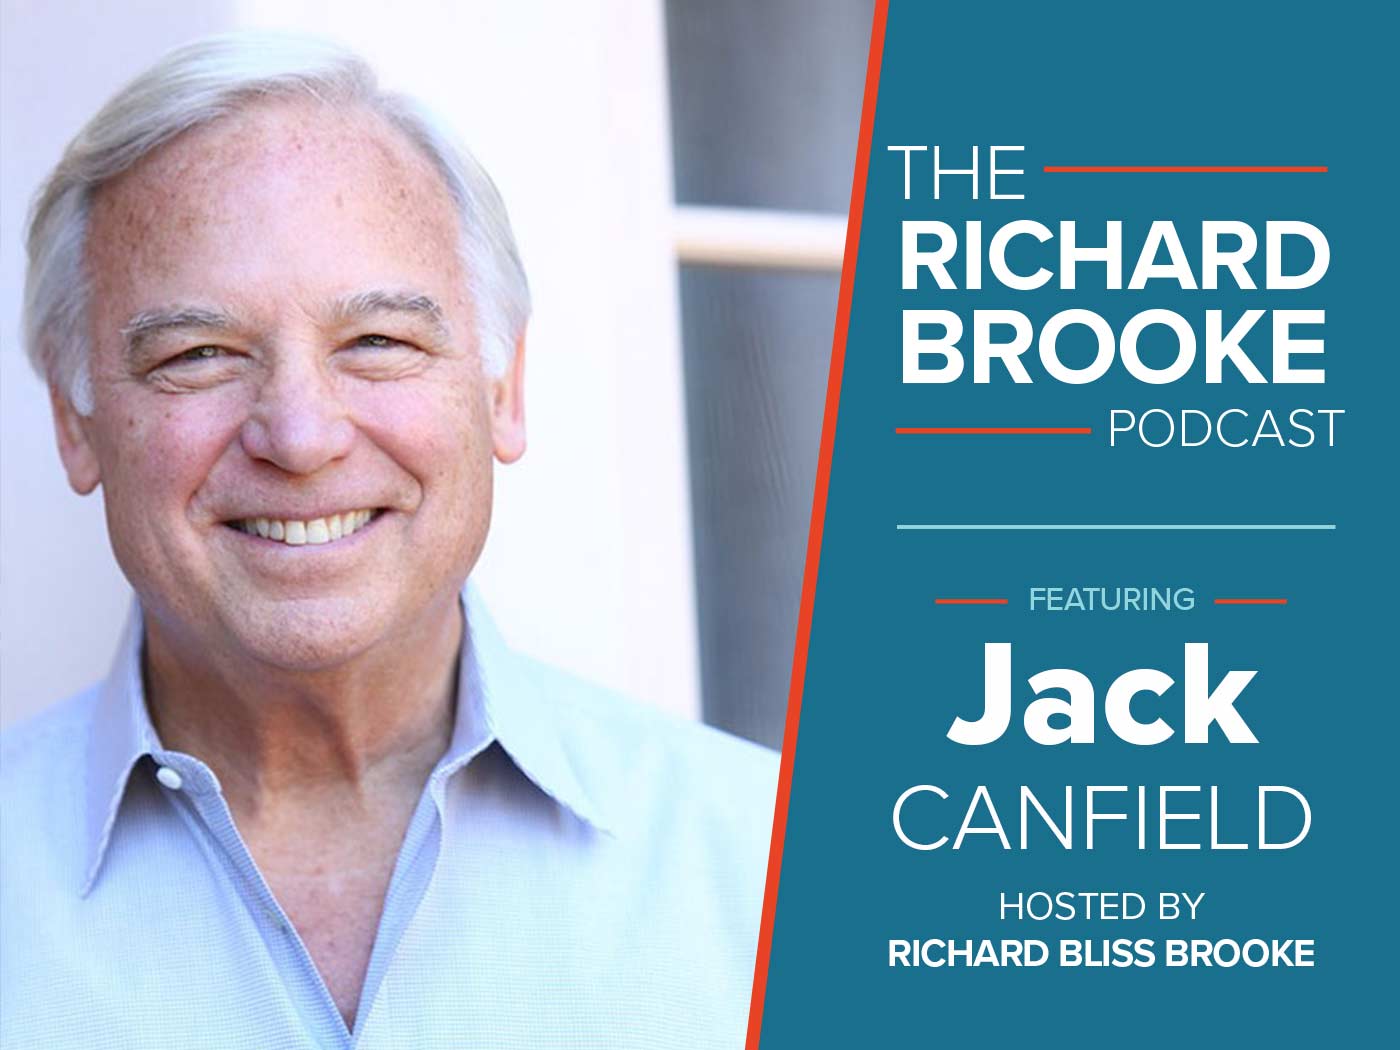 Jack Canfield - The Success Principles